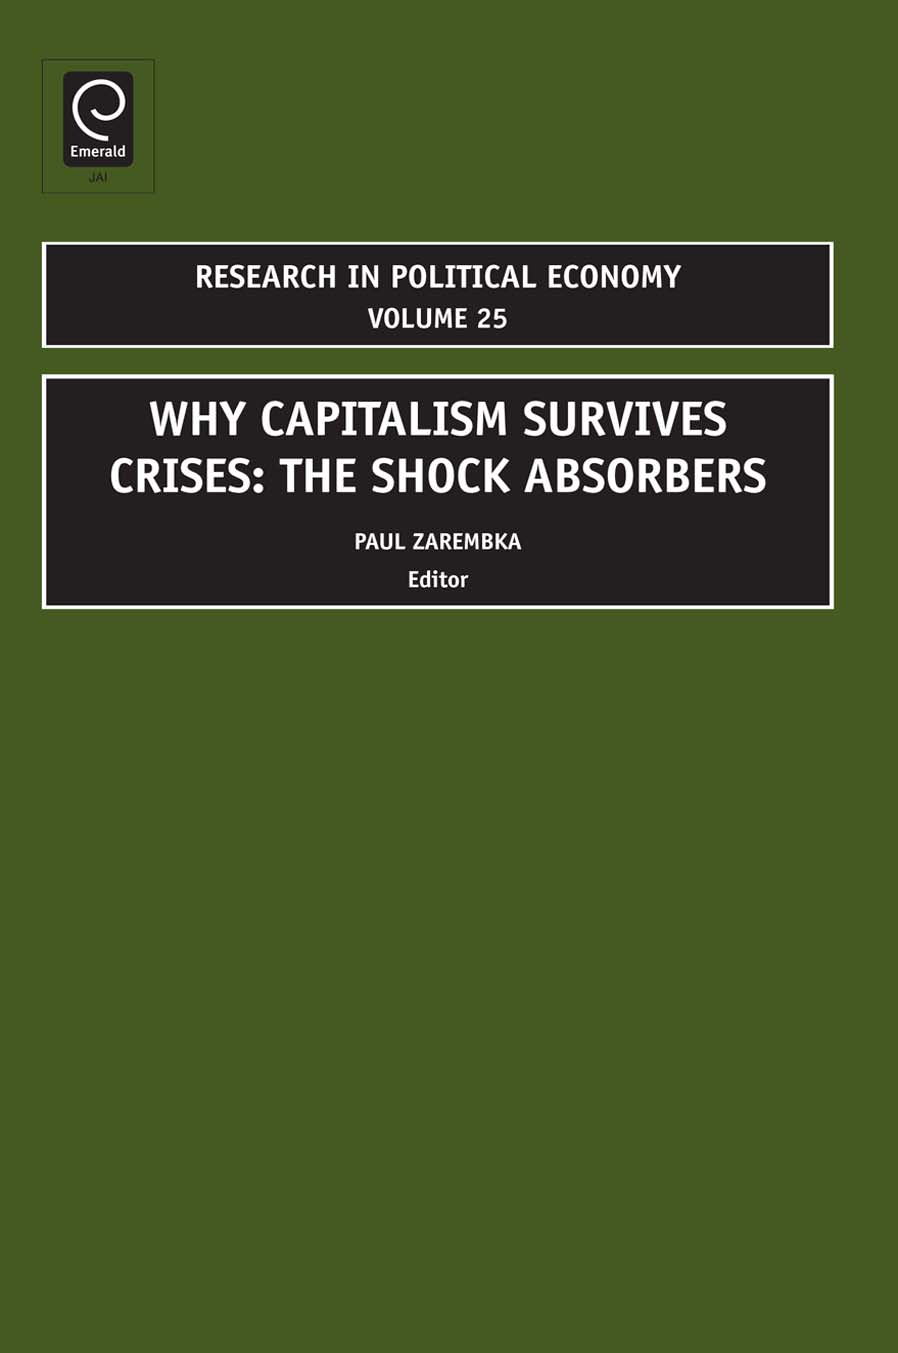 Why Capitalism Survives Crises - Paul Zarembka